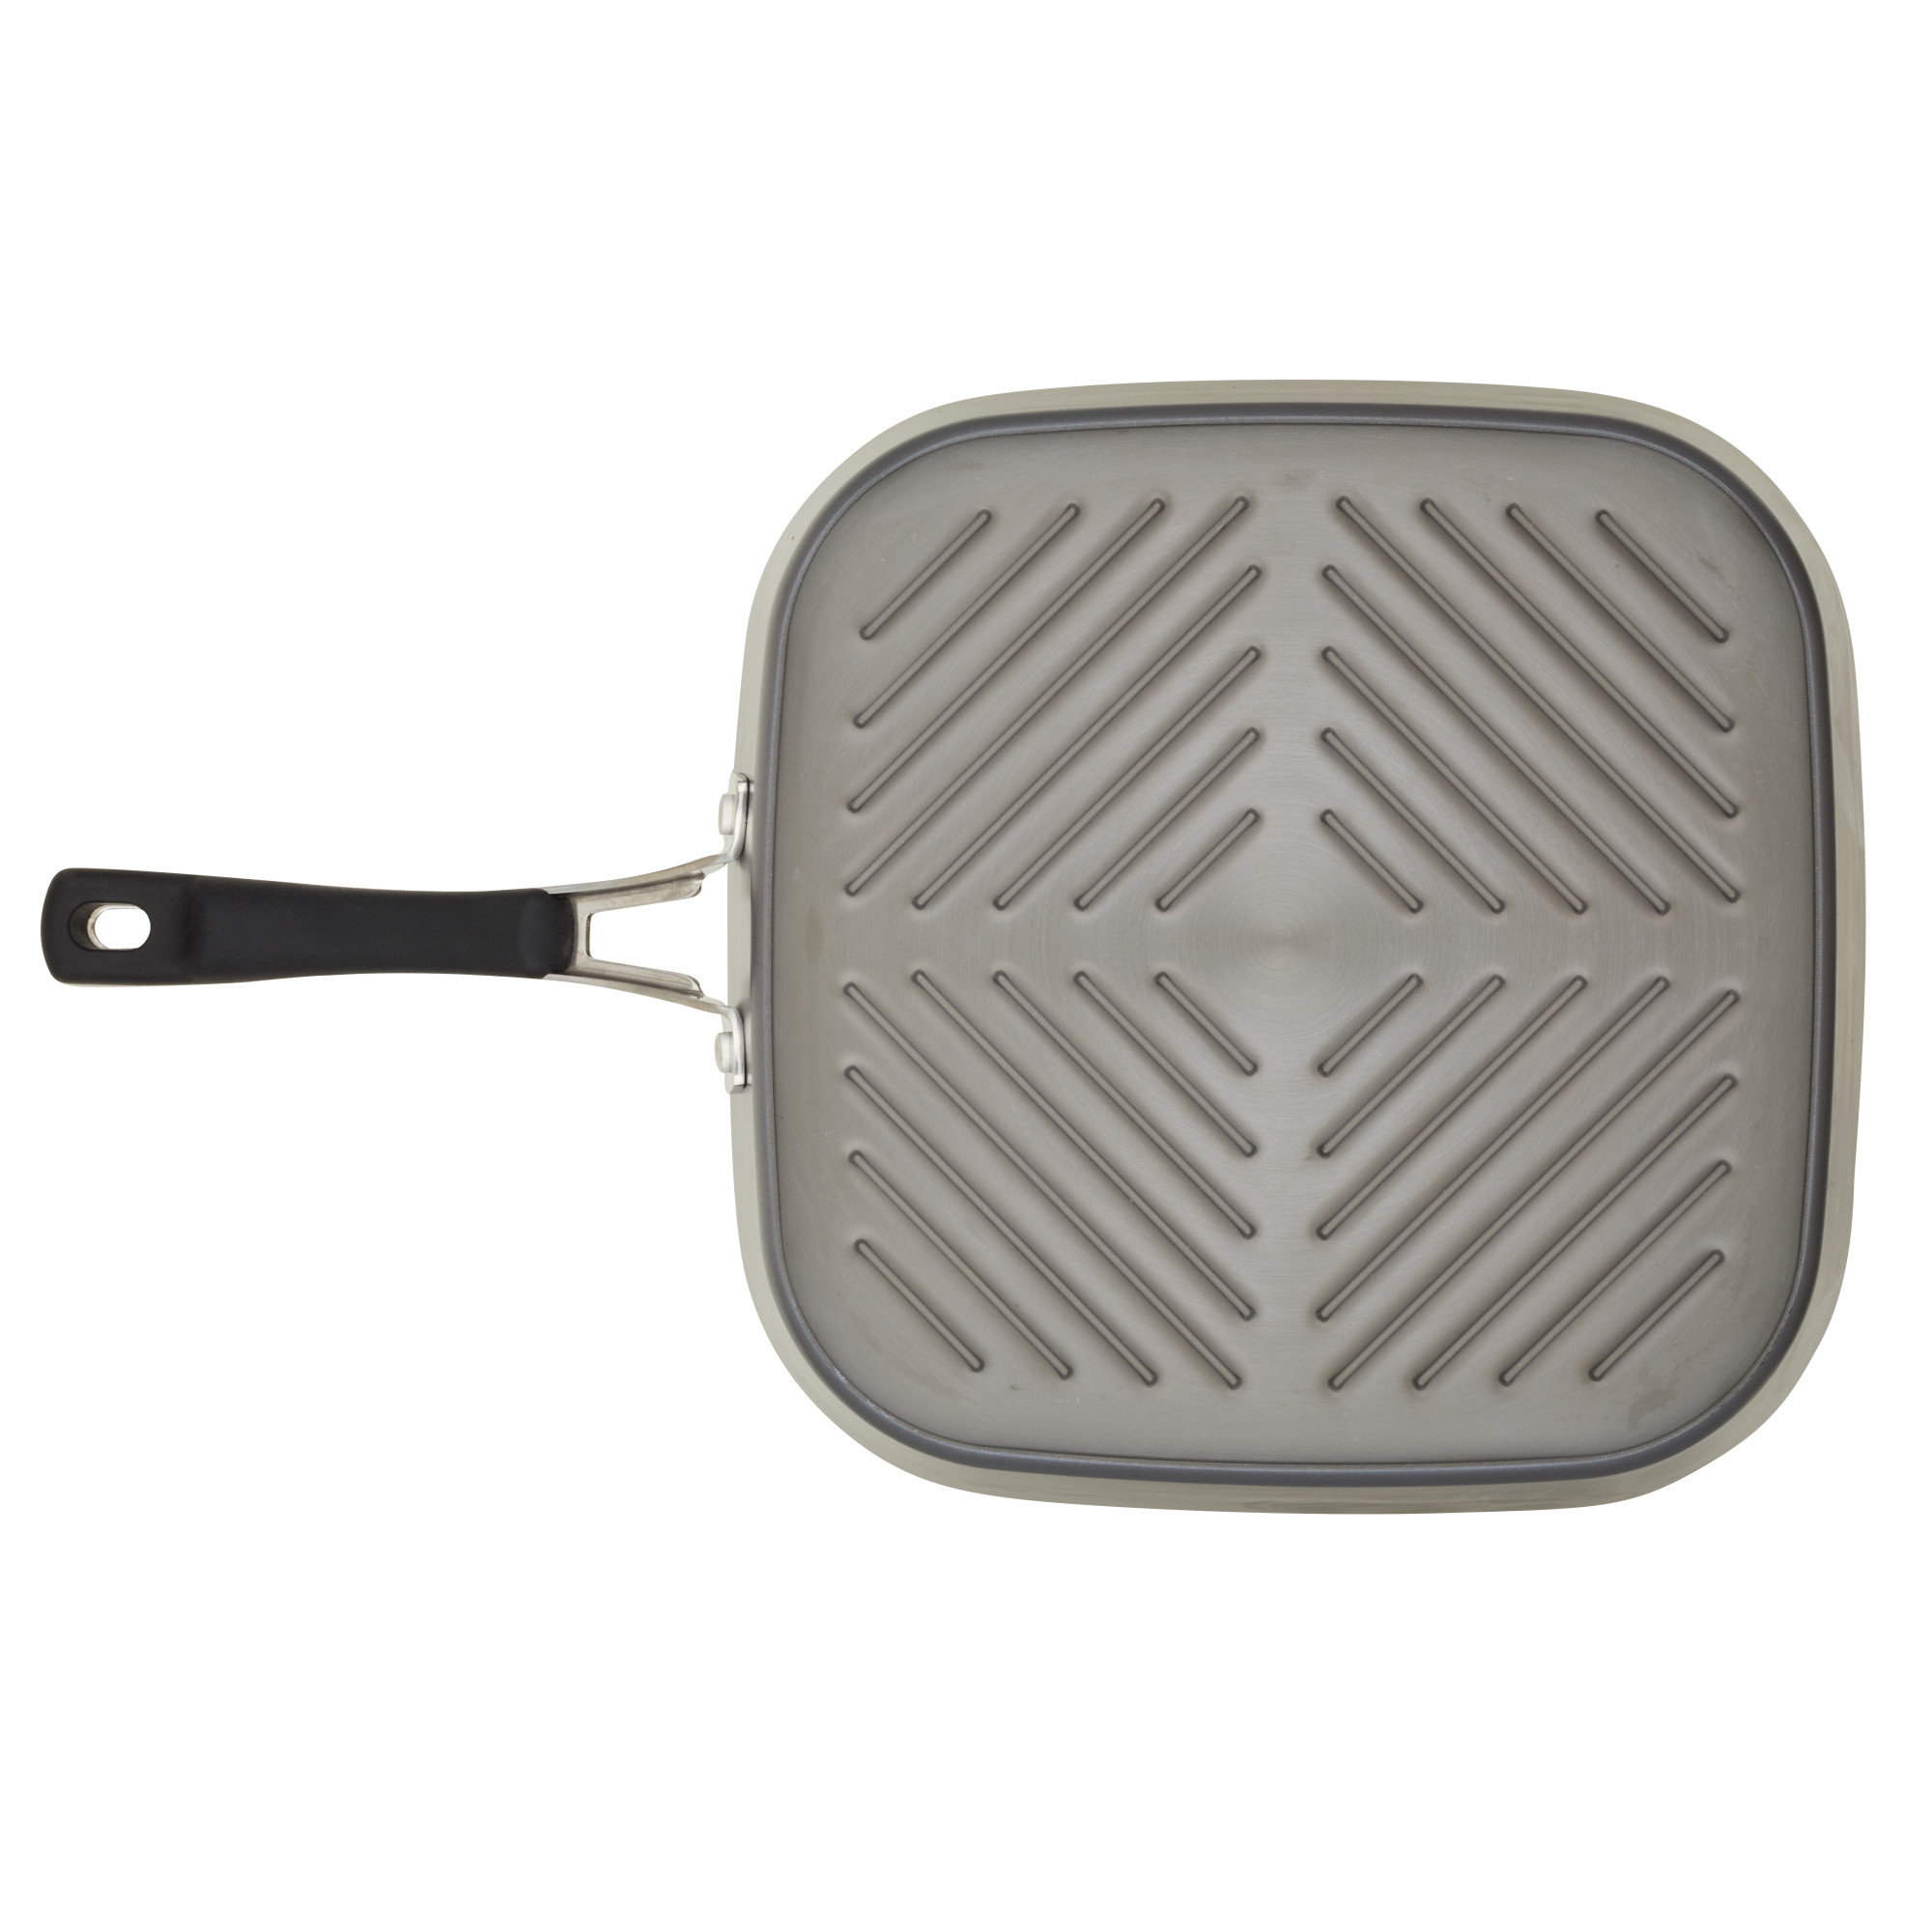  Calphalon Contemporary Hard-Anodized Aluminum Nonstick  Cookware, Square Grill Pan, 11-inch, Black: Home & Kitchen